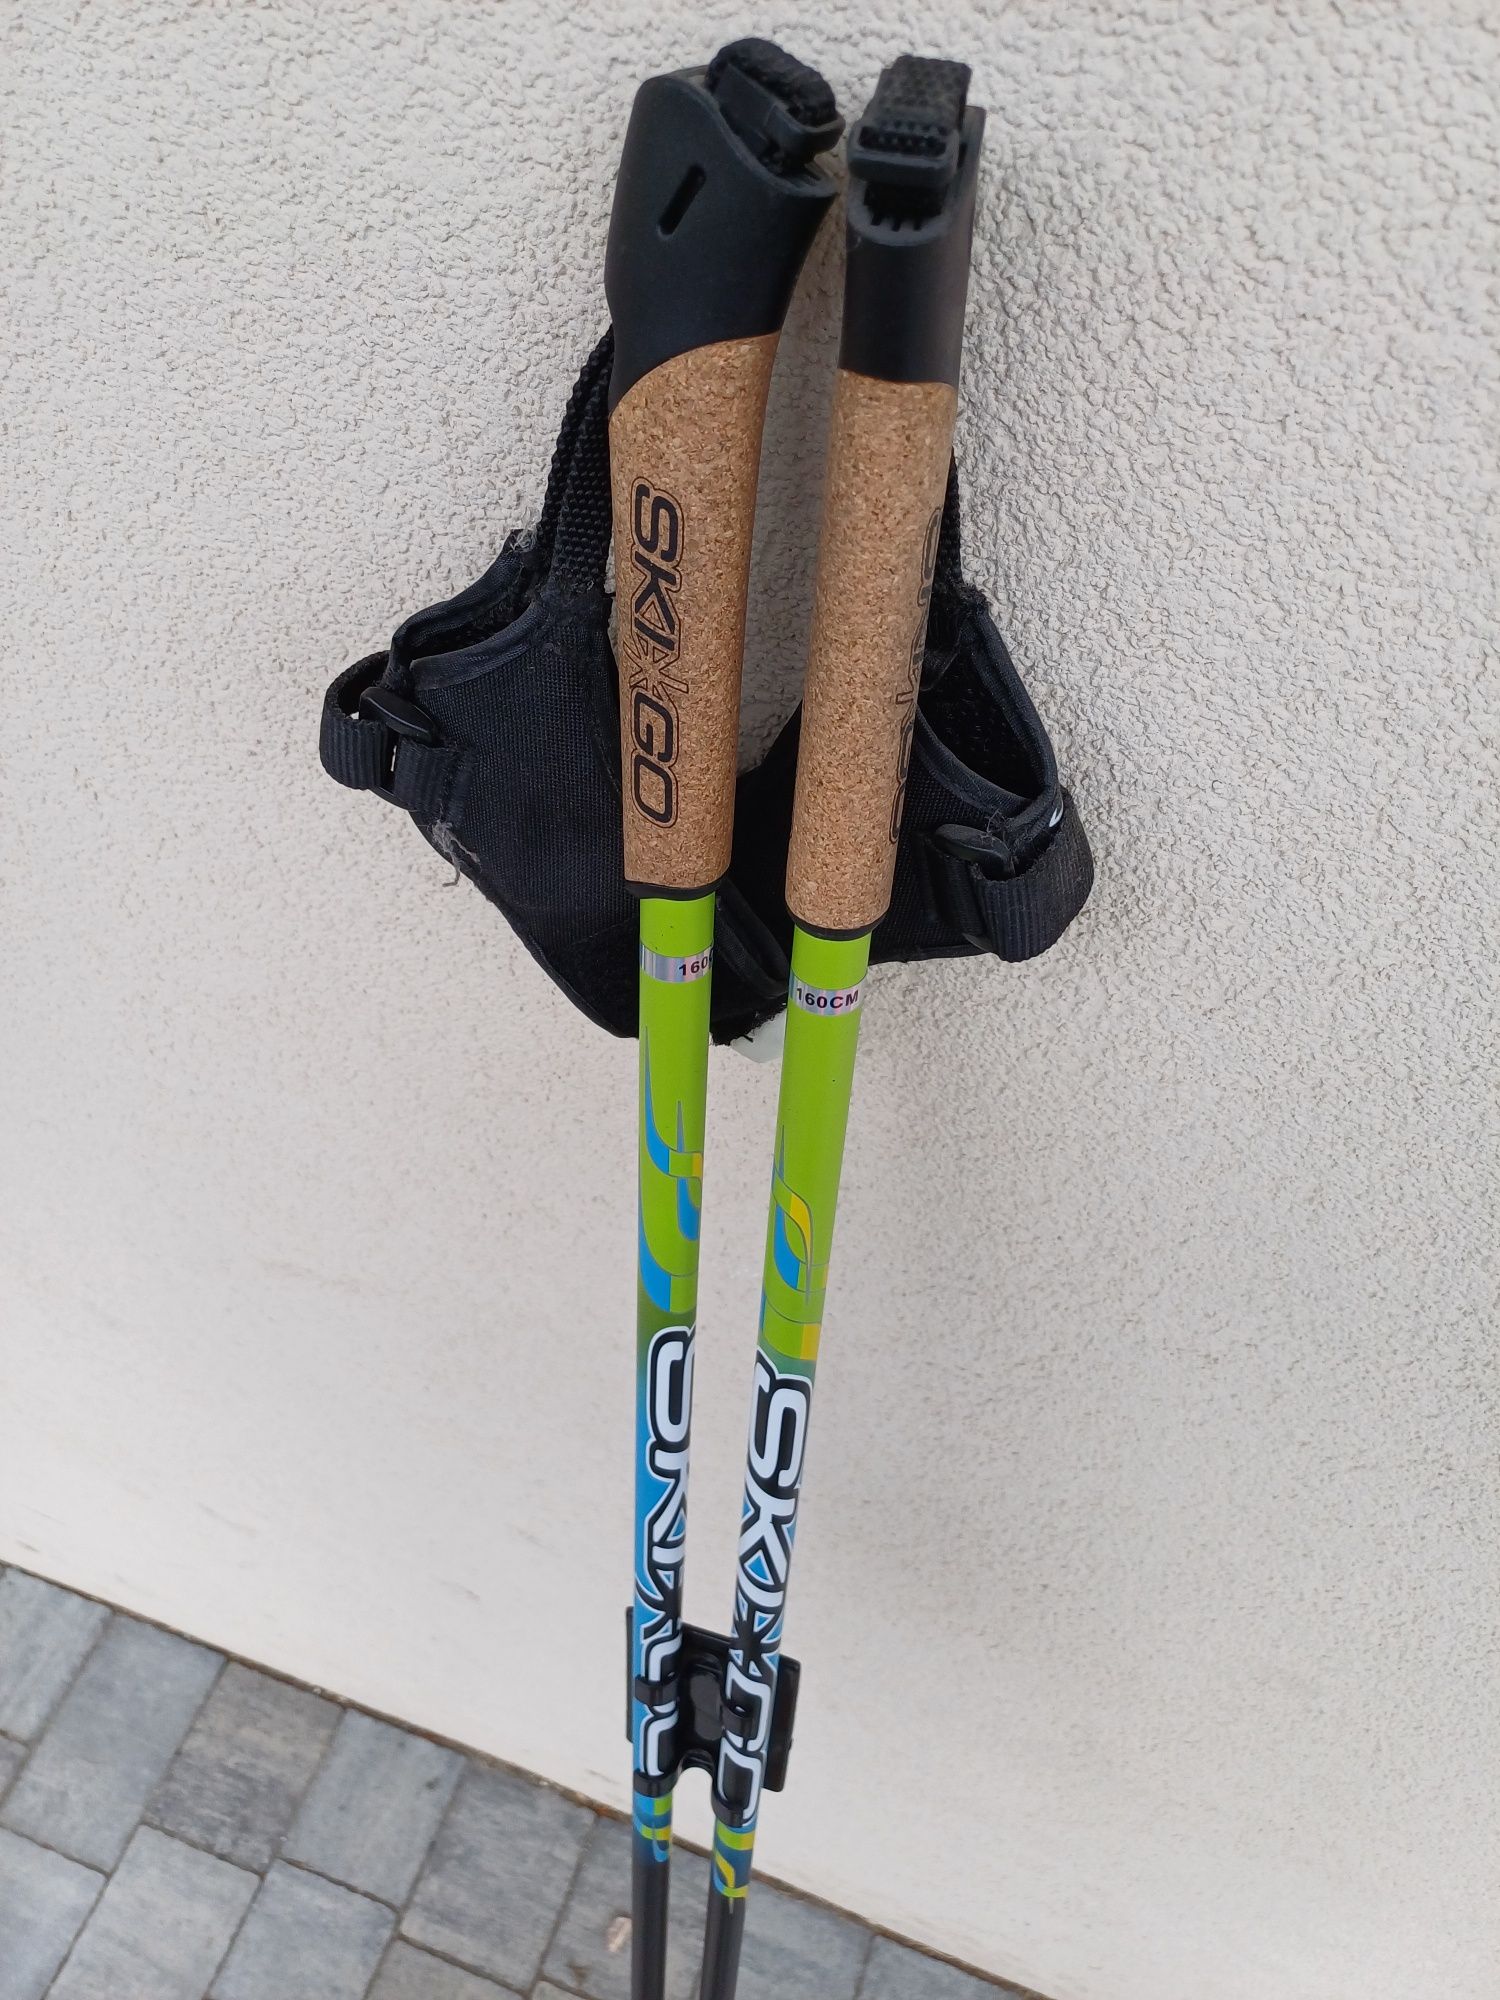 SkiGo 160 kije kijki biegowe nartorolki narty biegowe